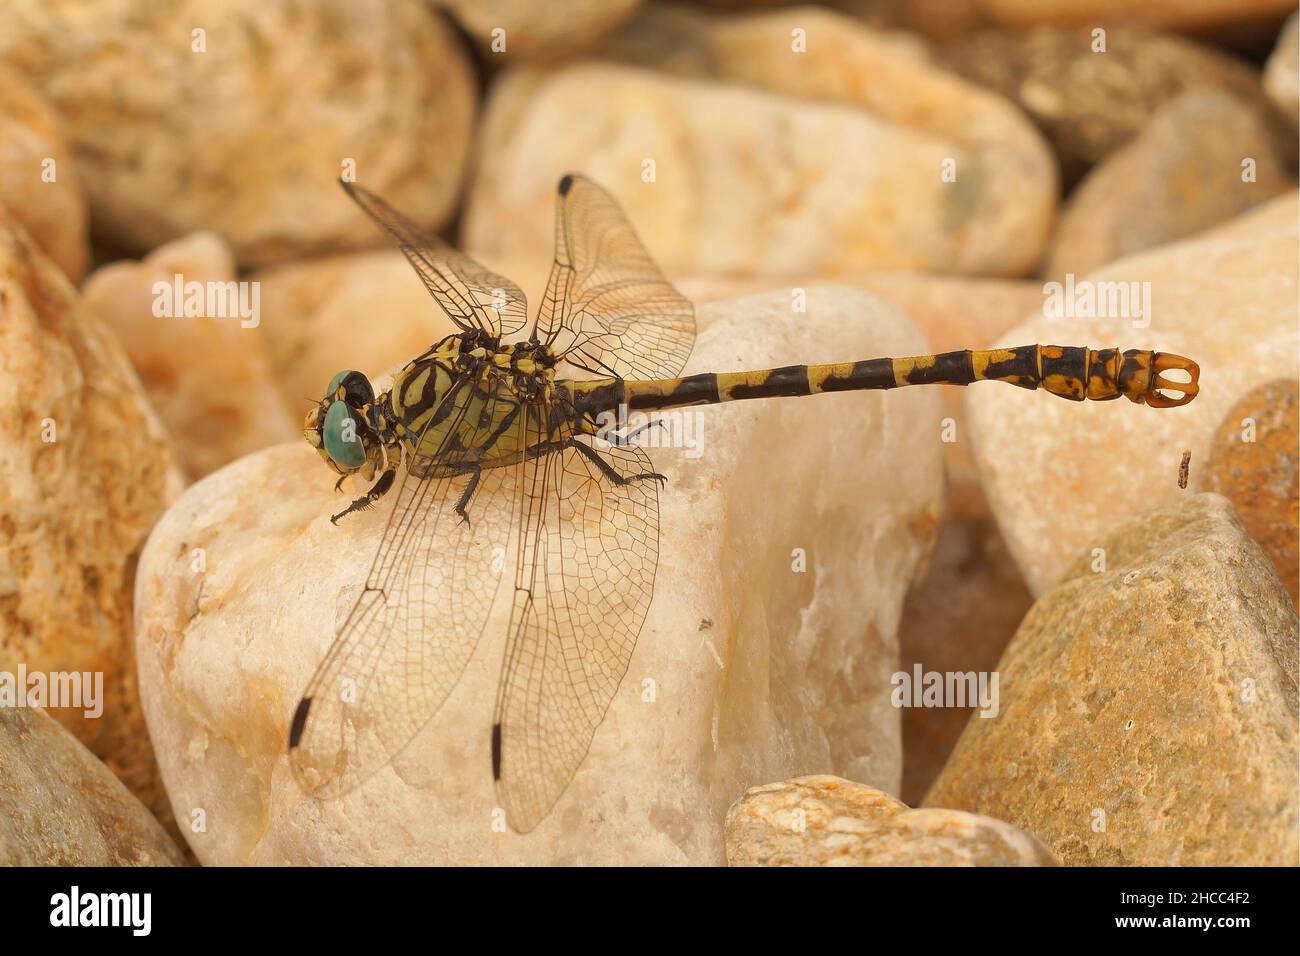 La dragonfly dall'occhio verde, Onychogomphus forcipatus Foto Stock